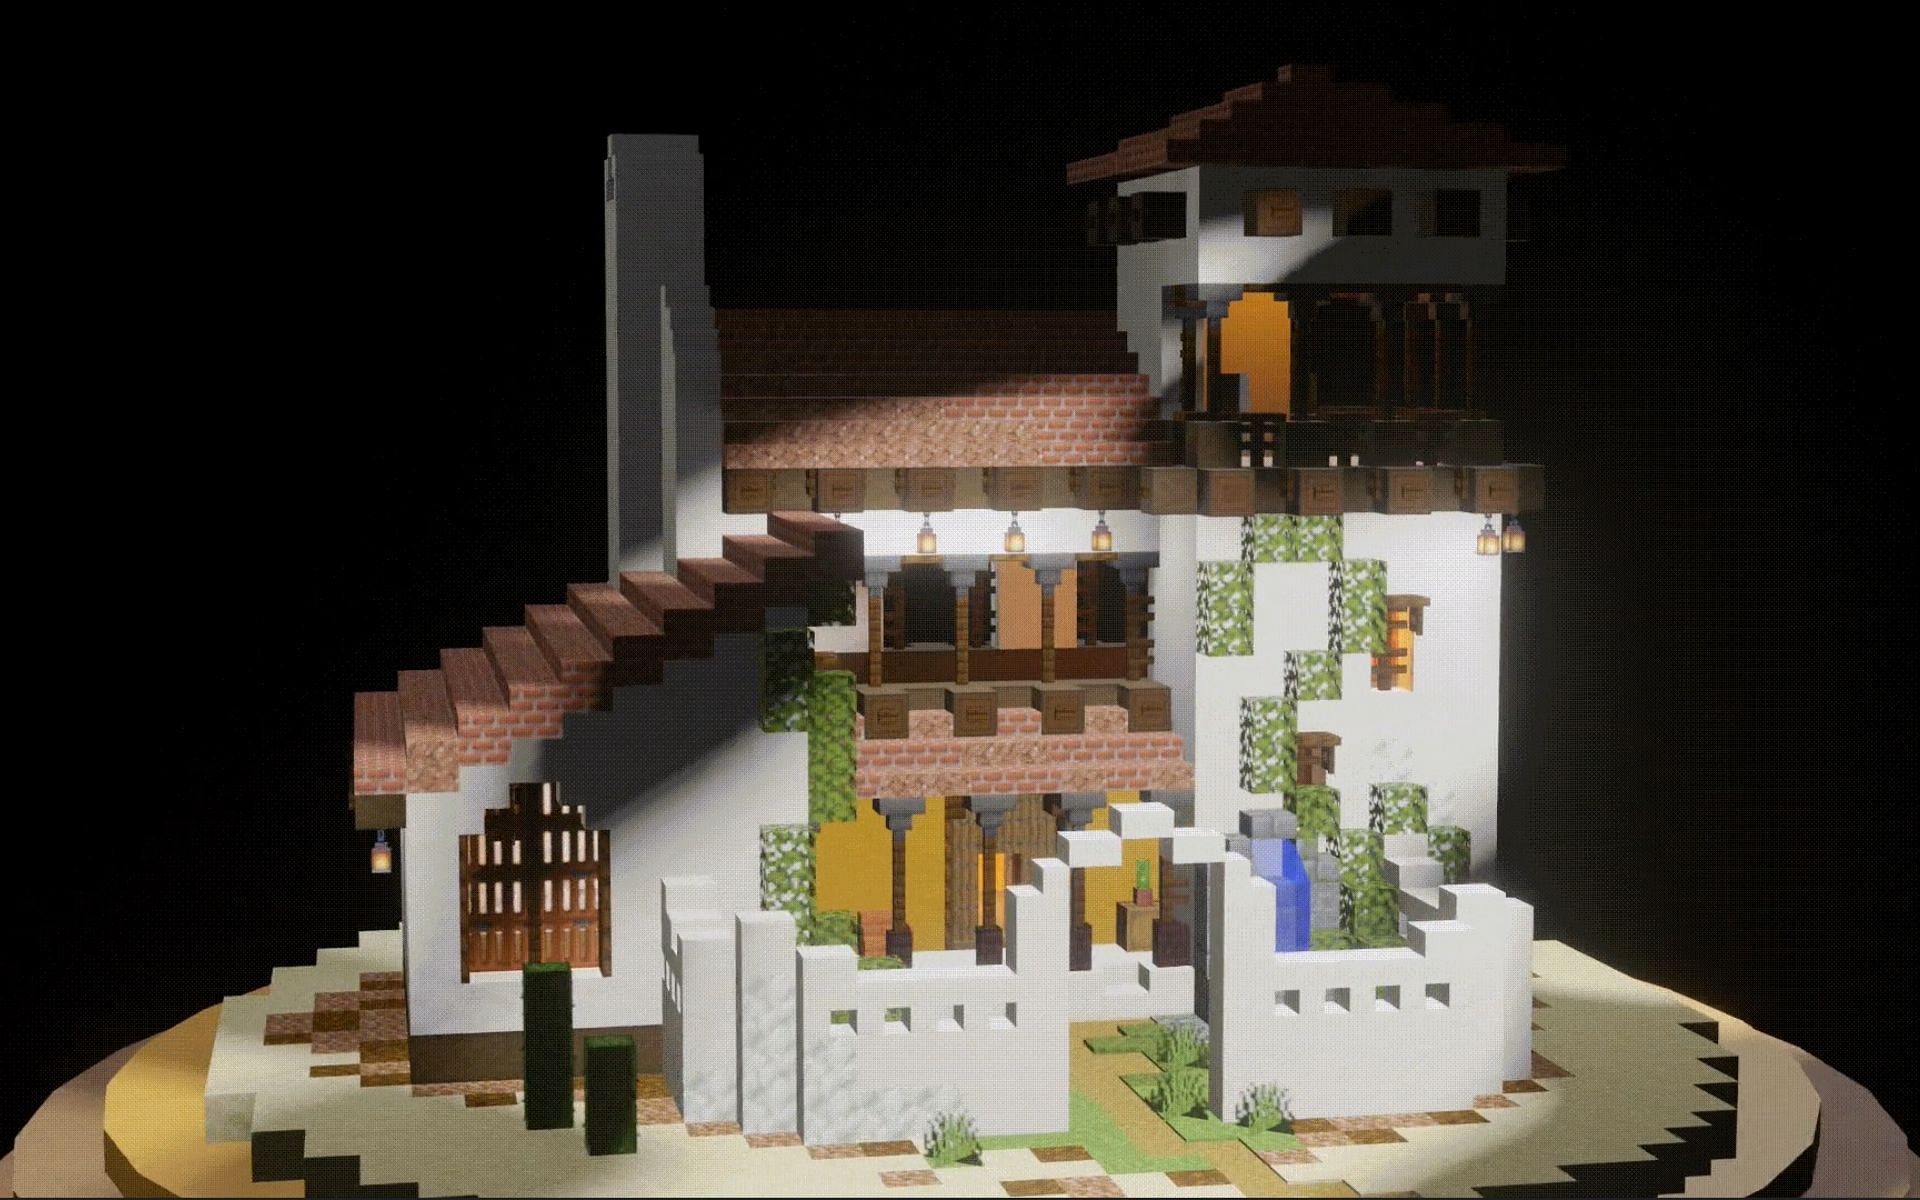 Spanish Revival architecture inspired build in Minecraft (Image via u/Jak03e Reddit)